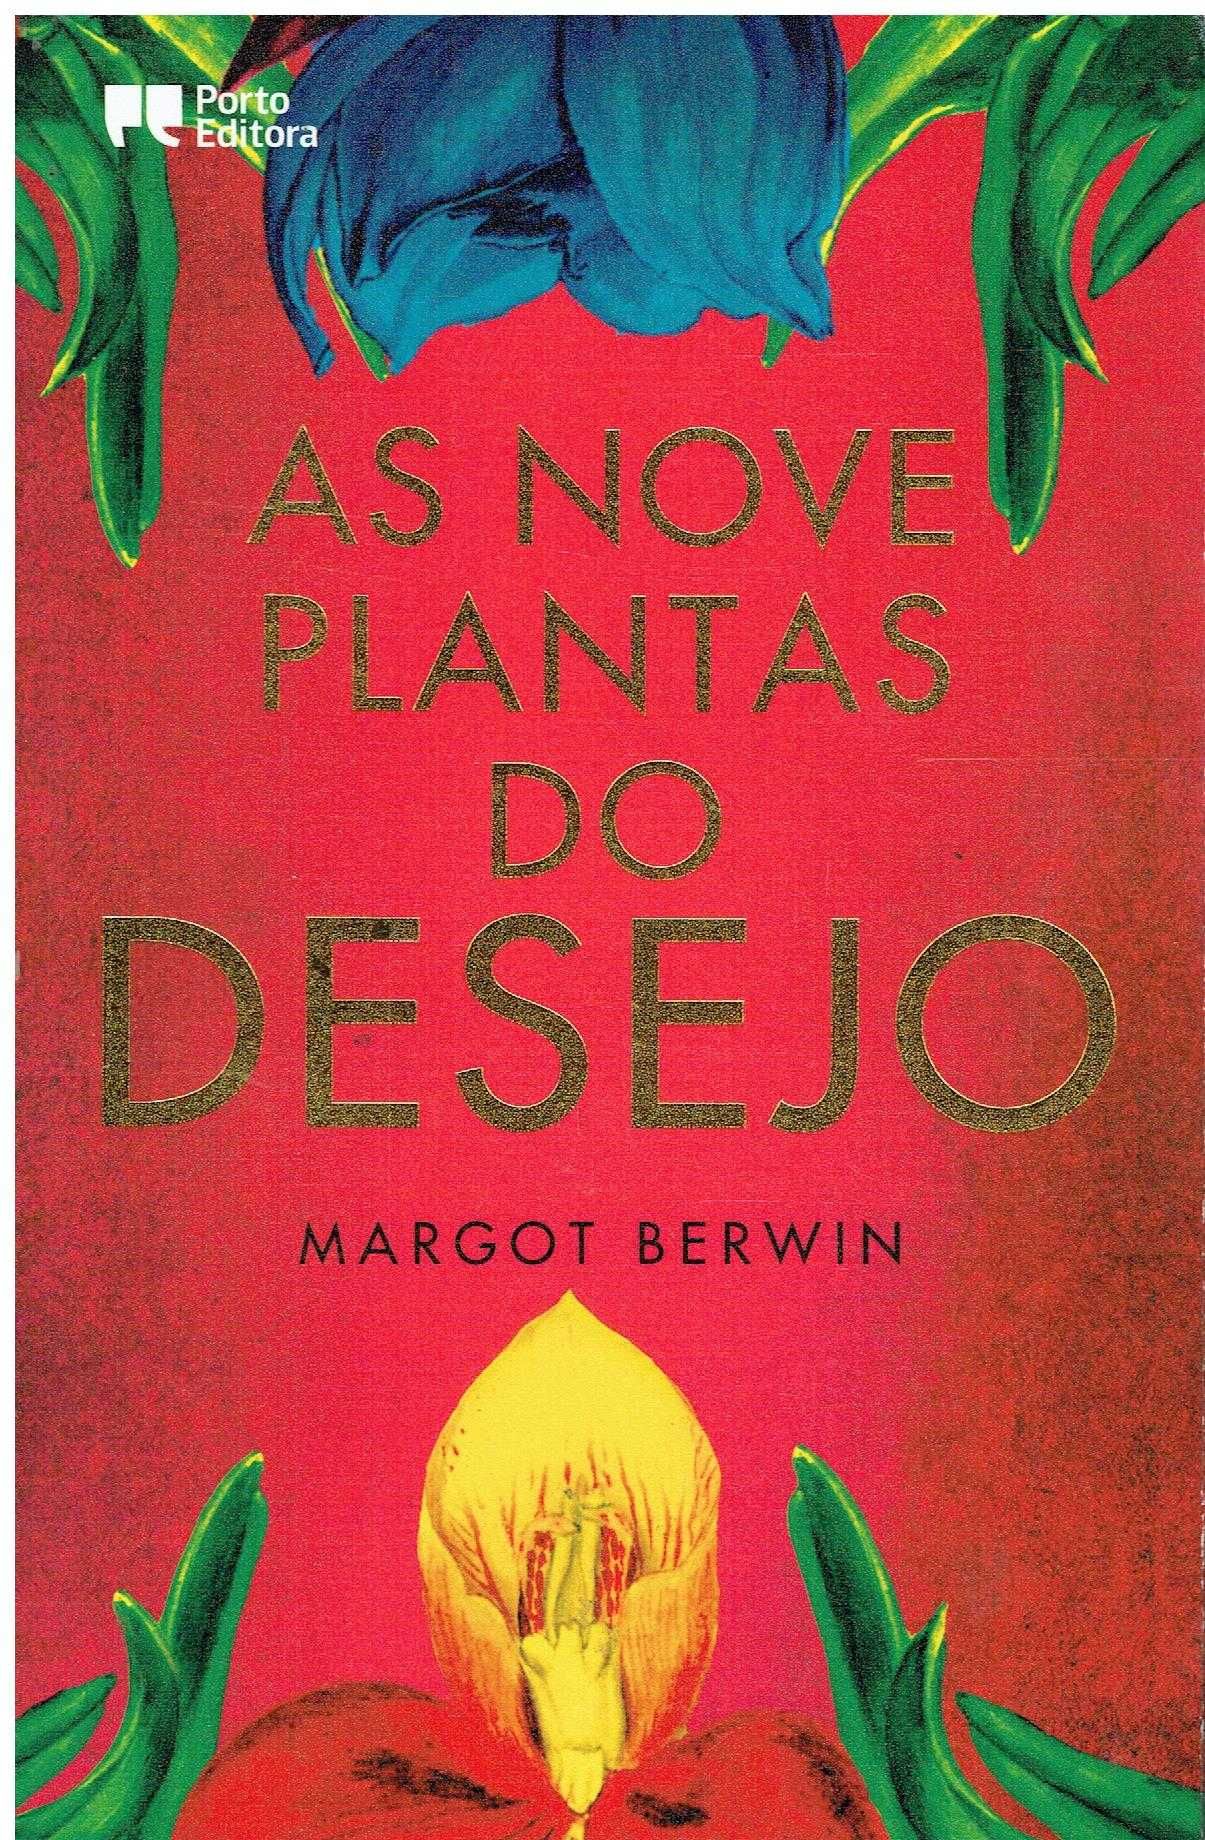 11965

As Nove Plantas do Desejo
de Margot Berwin